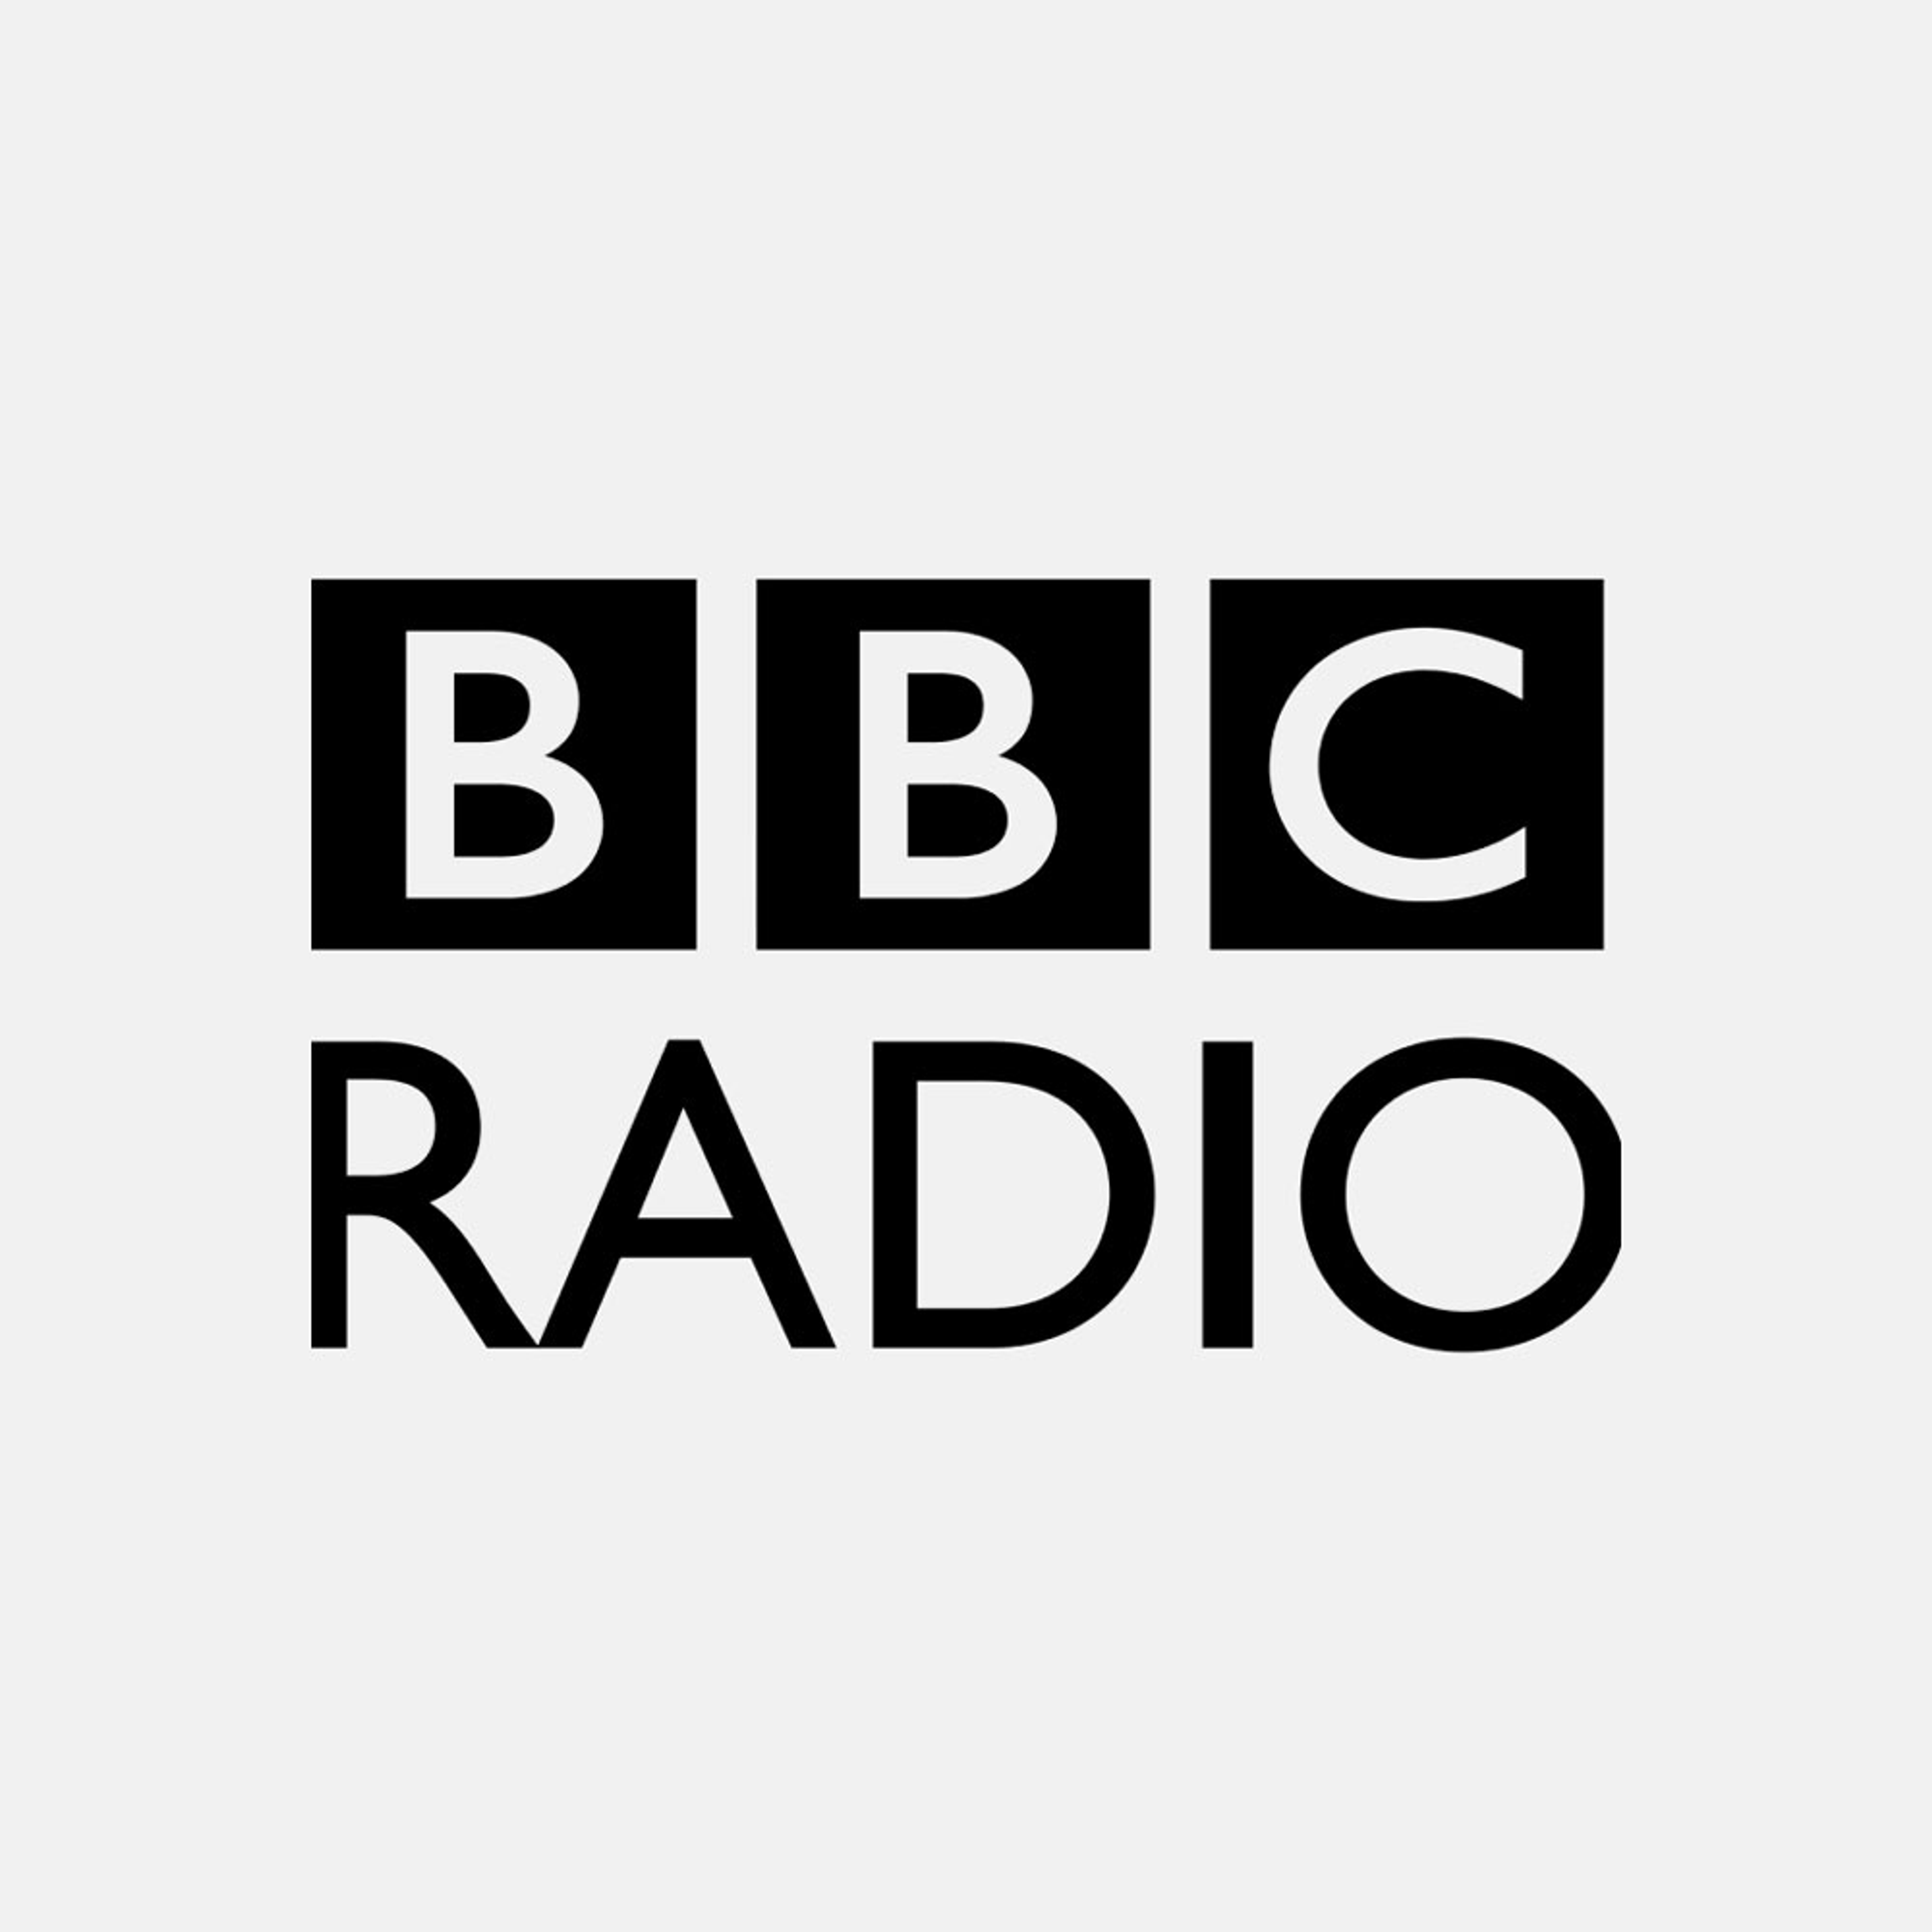 BBC radio station cover